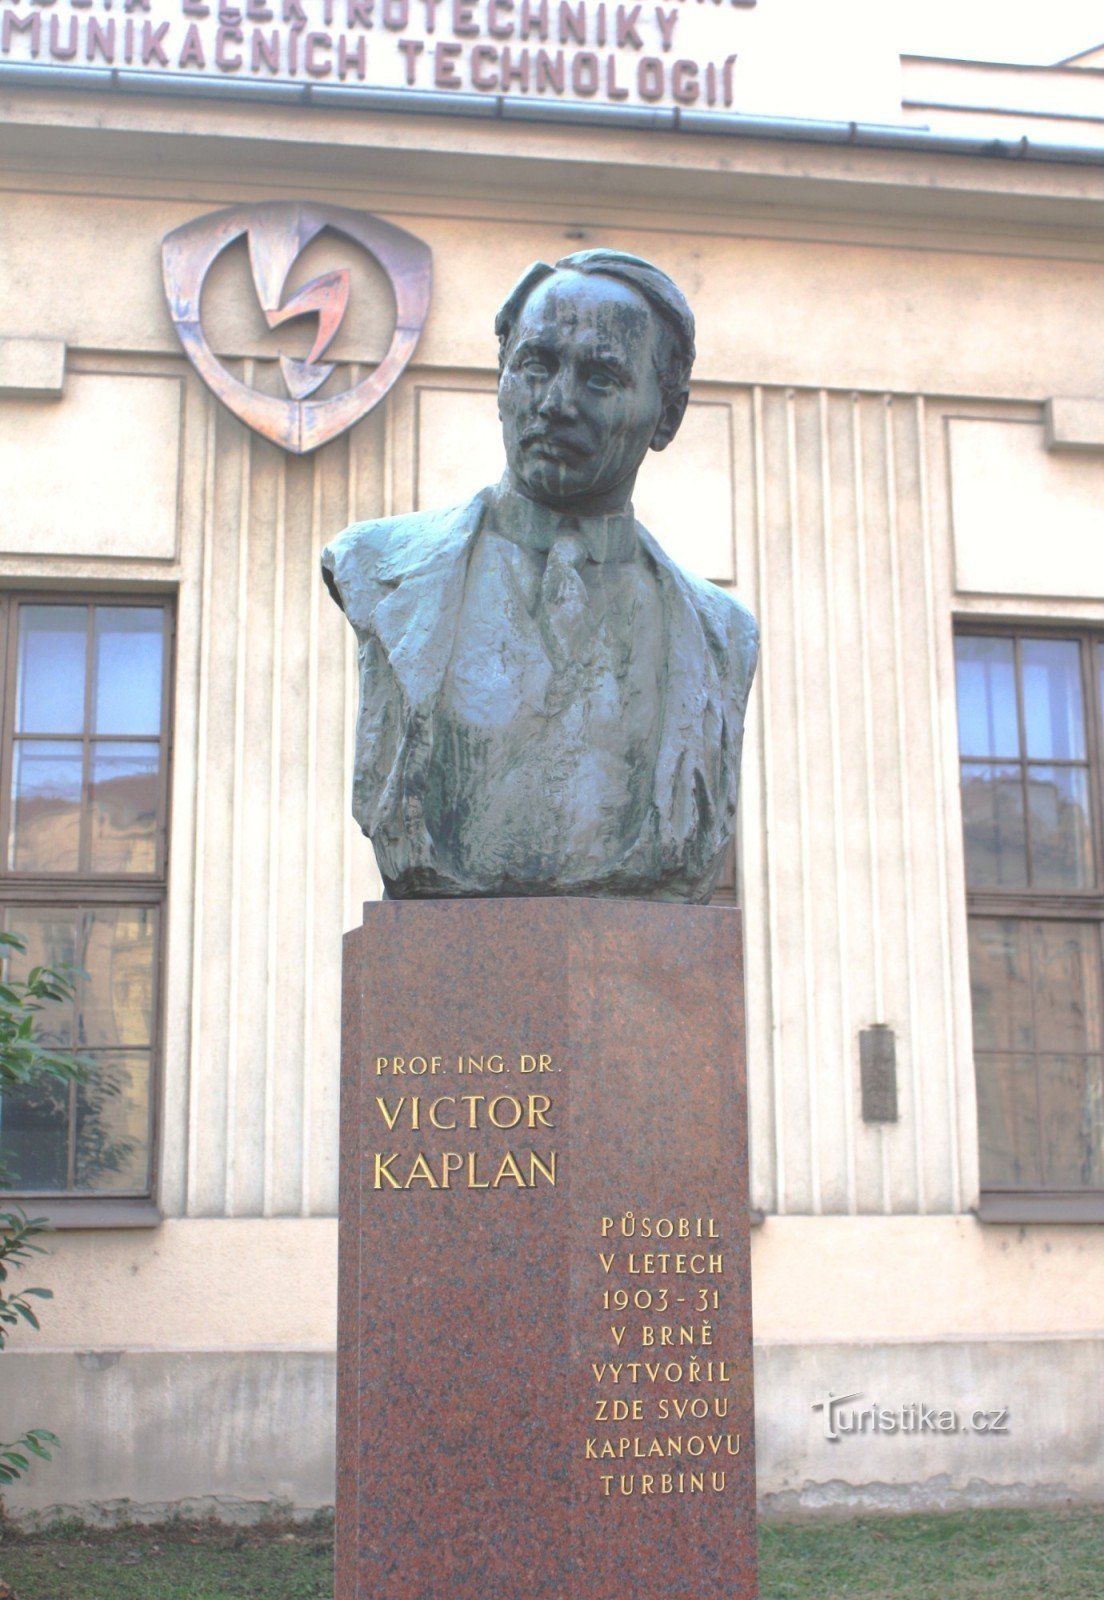 Brno - monument to Viktor Kaplan